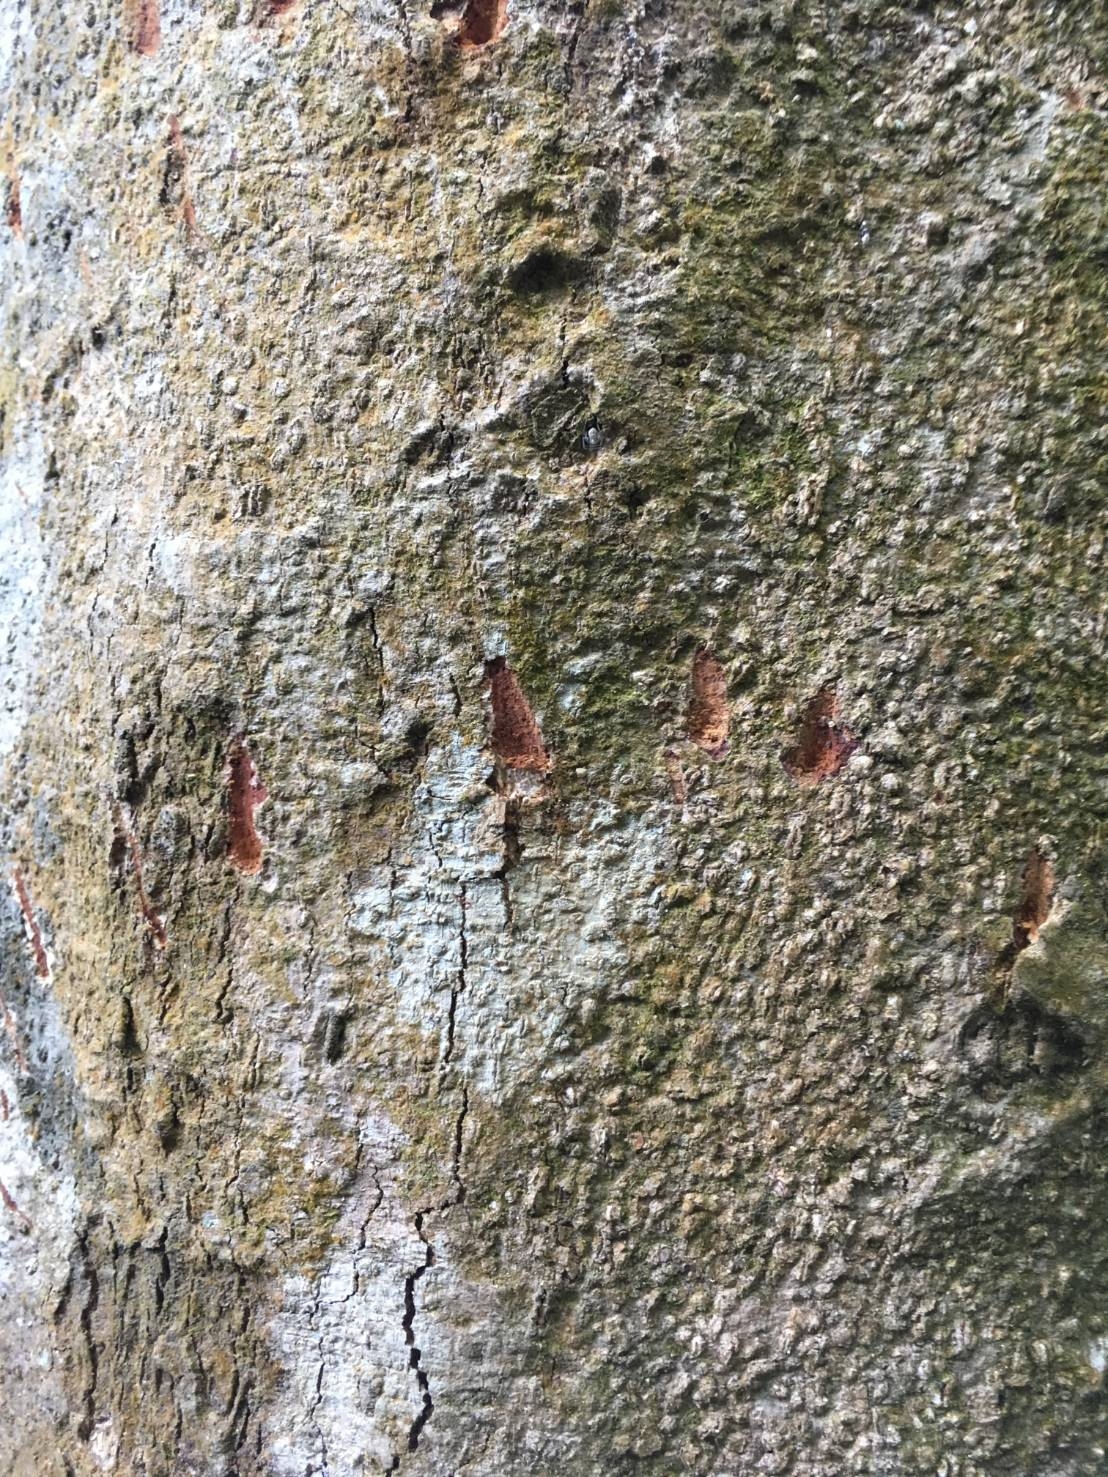 Asiatic black bear_U thibetanus_Meghalaya India_5 hind foot claw marks on tree_D Garshelis